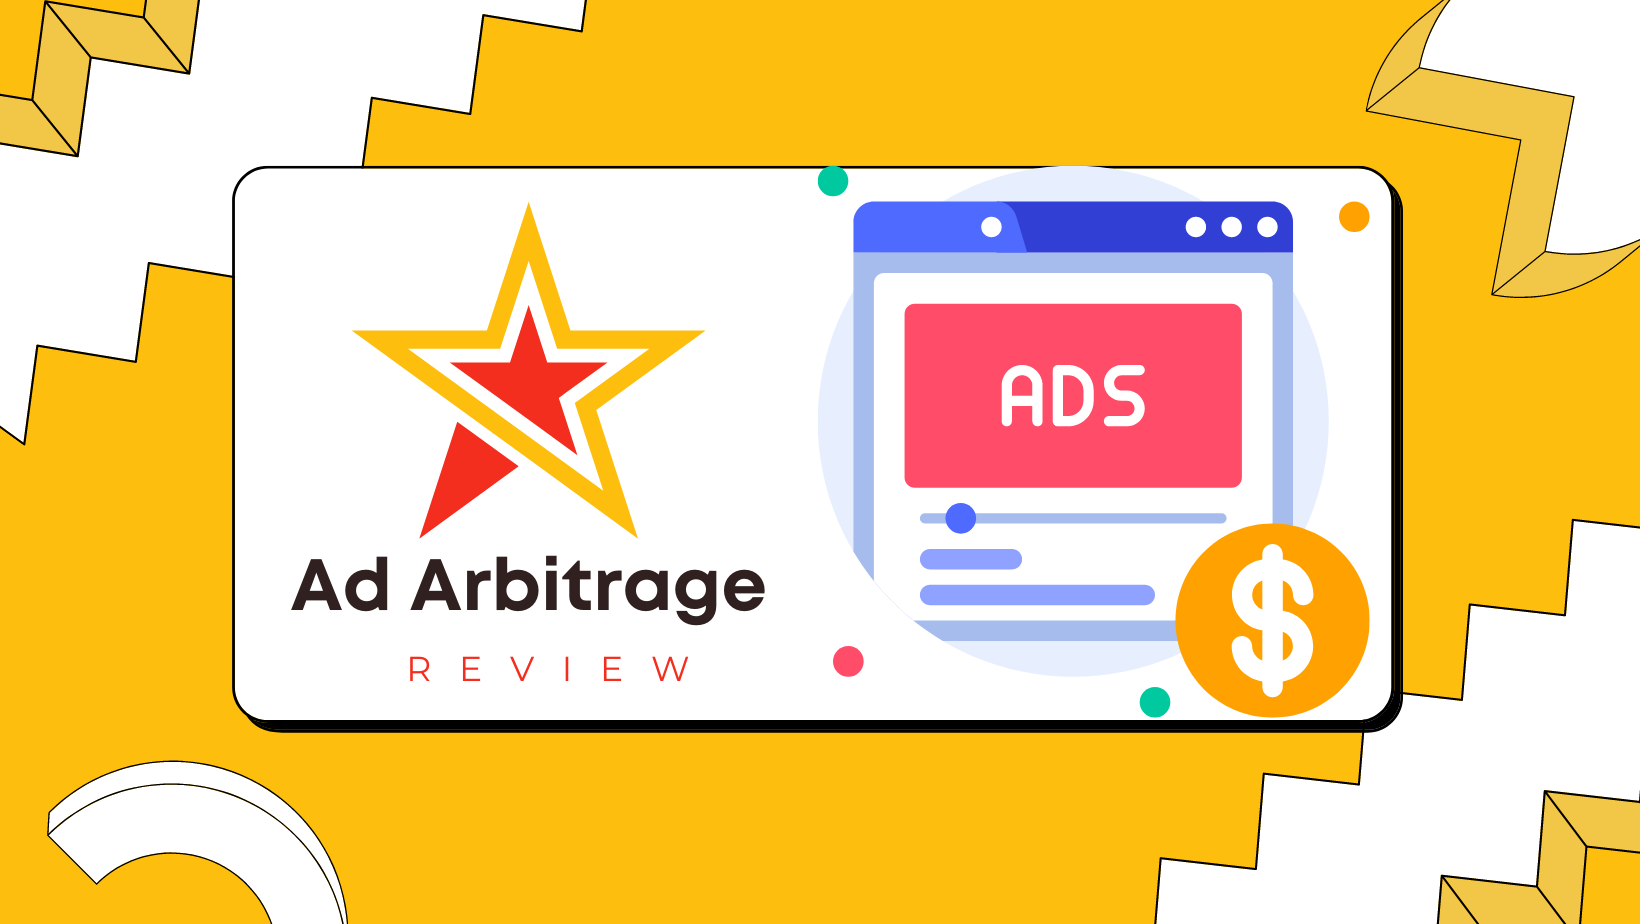 Ad Arbitrage Review